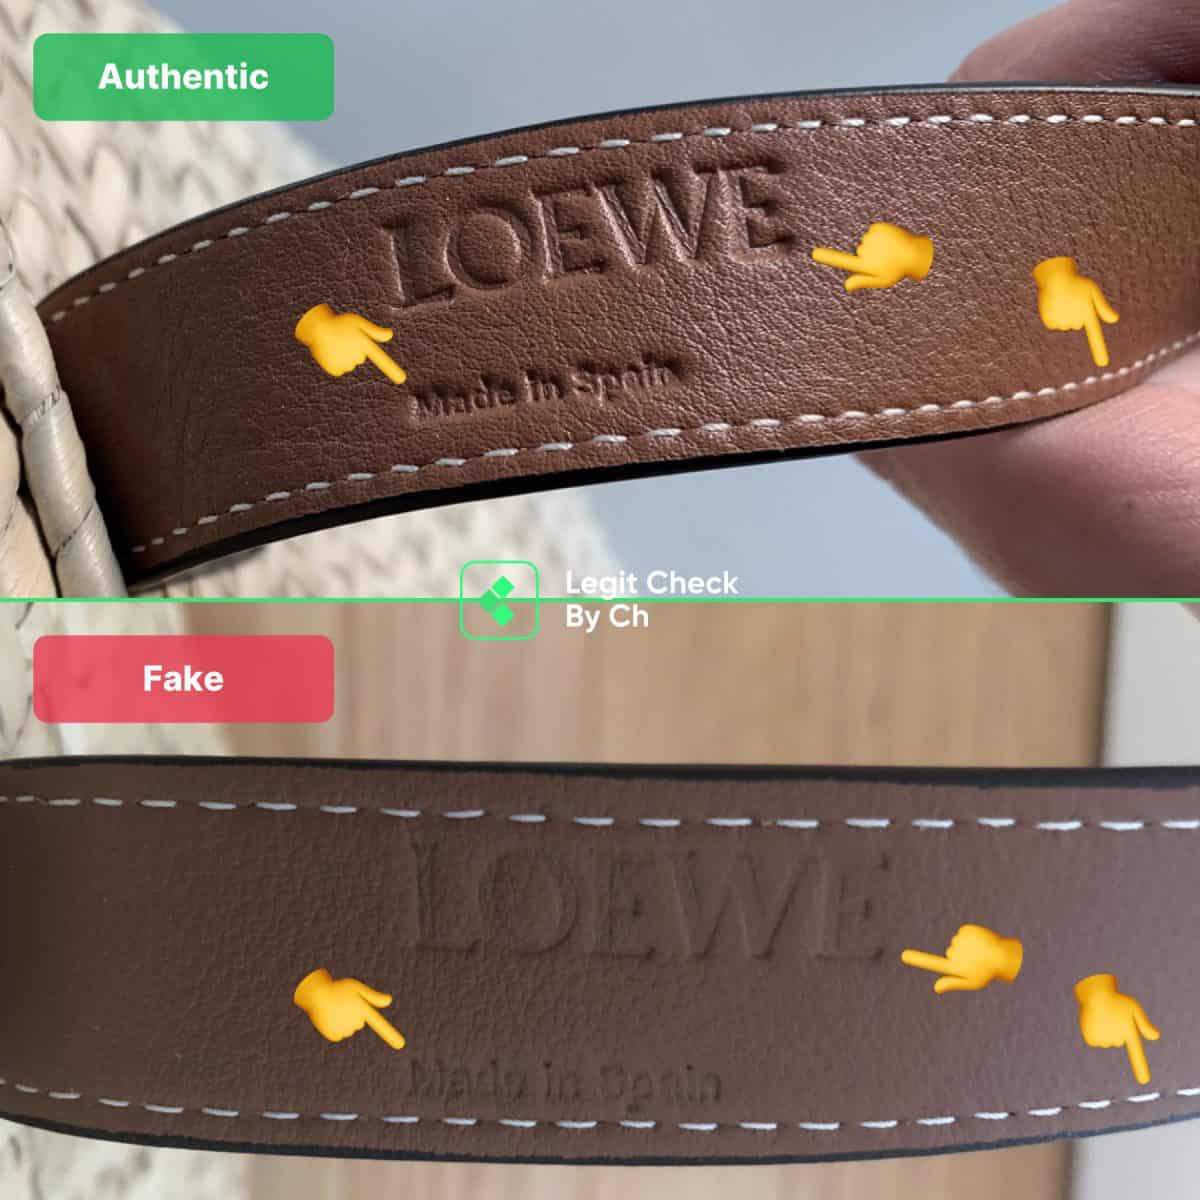 Authentic vs Fake Loewe Basket bag comparison: the strap